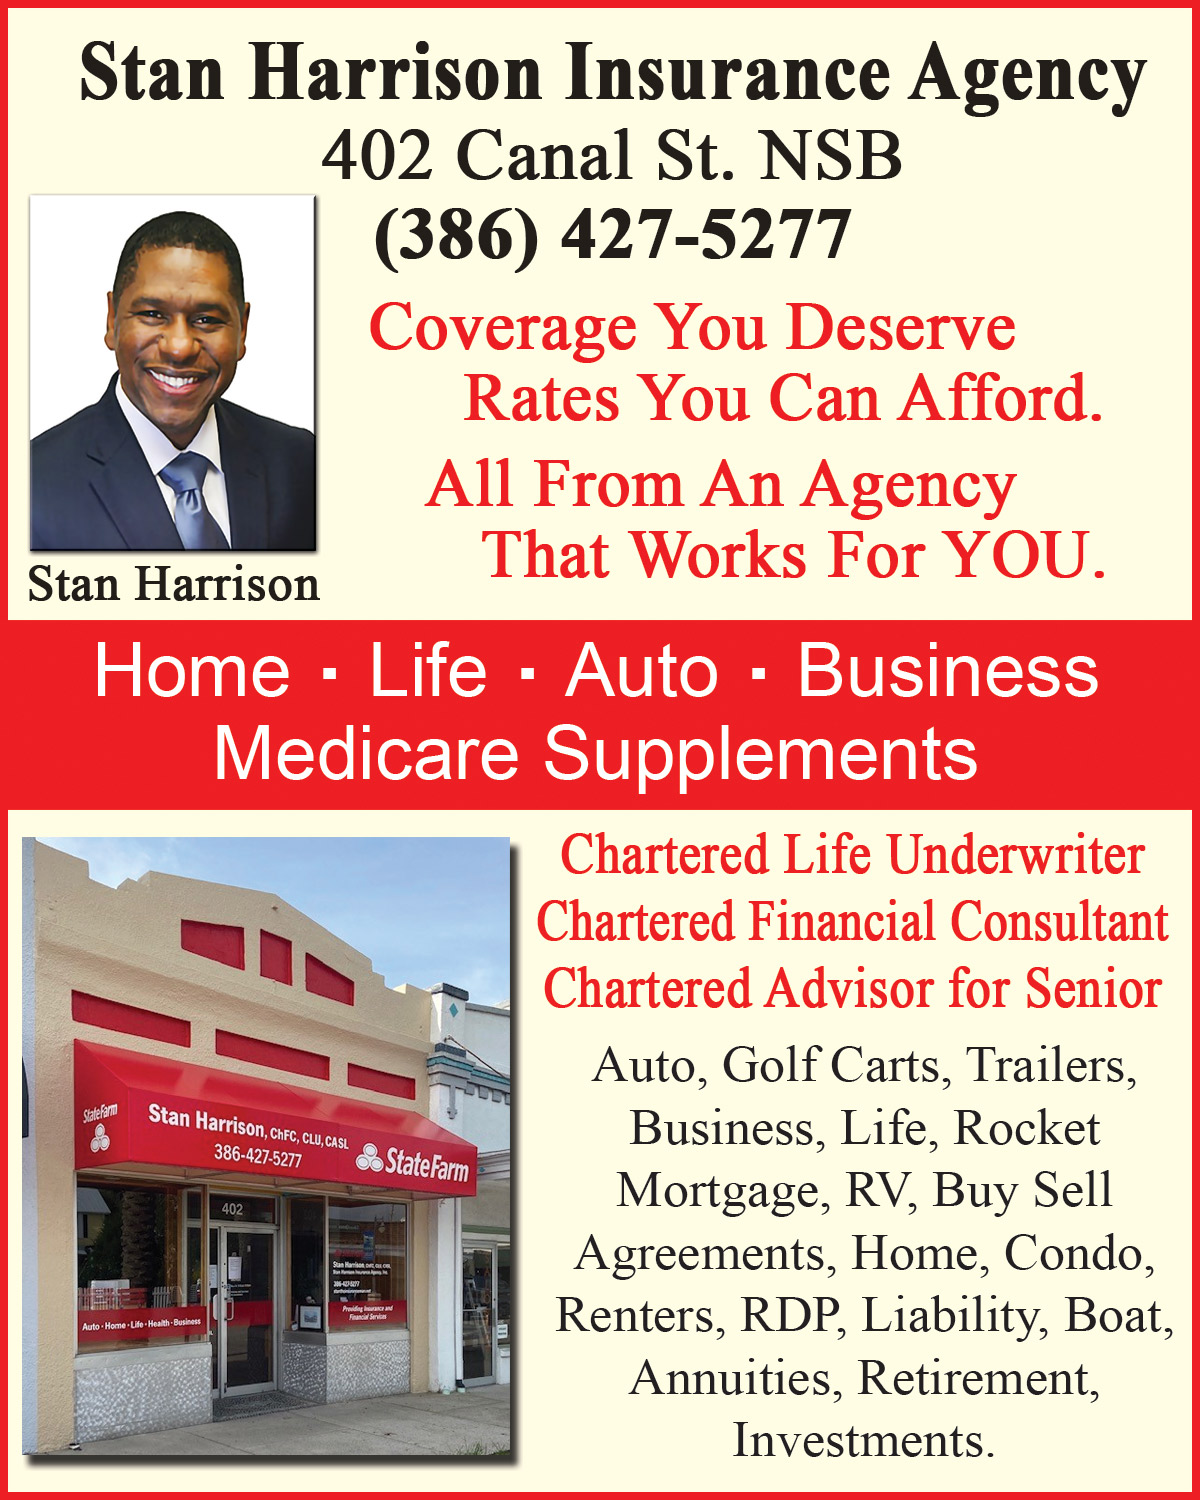 Stan Harrison Insurance Agency 402 Canal St. NSB (386) 427-5277